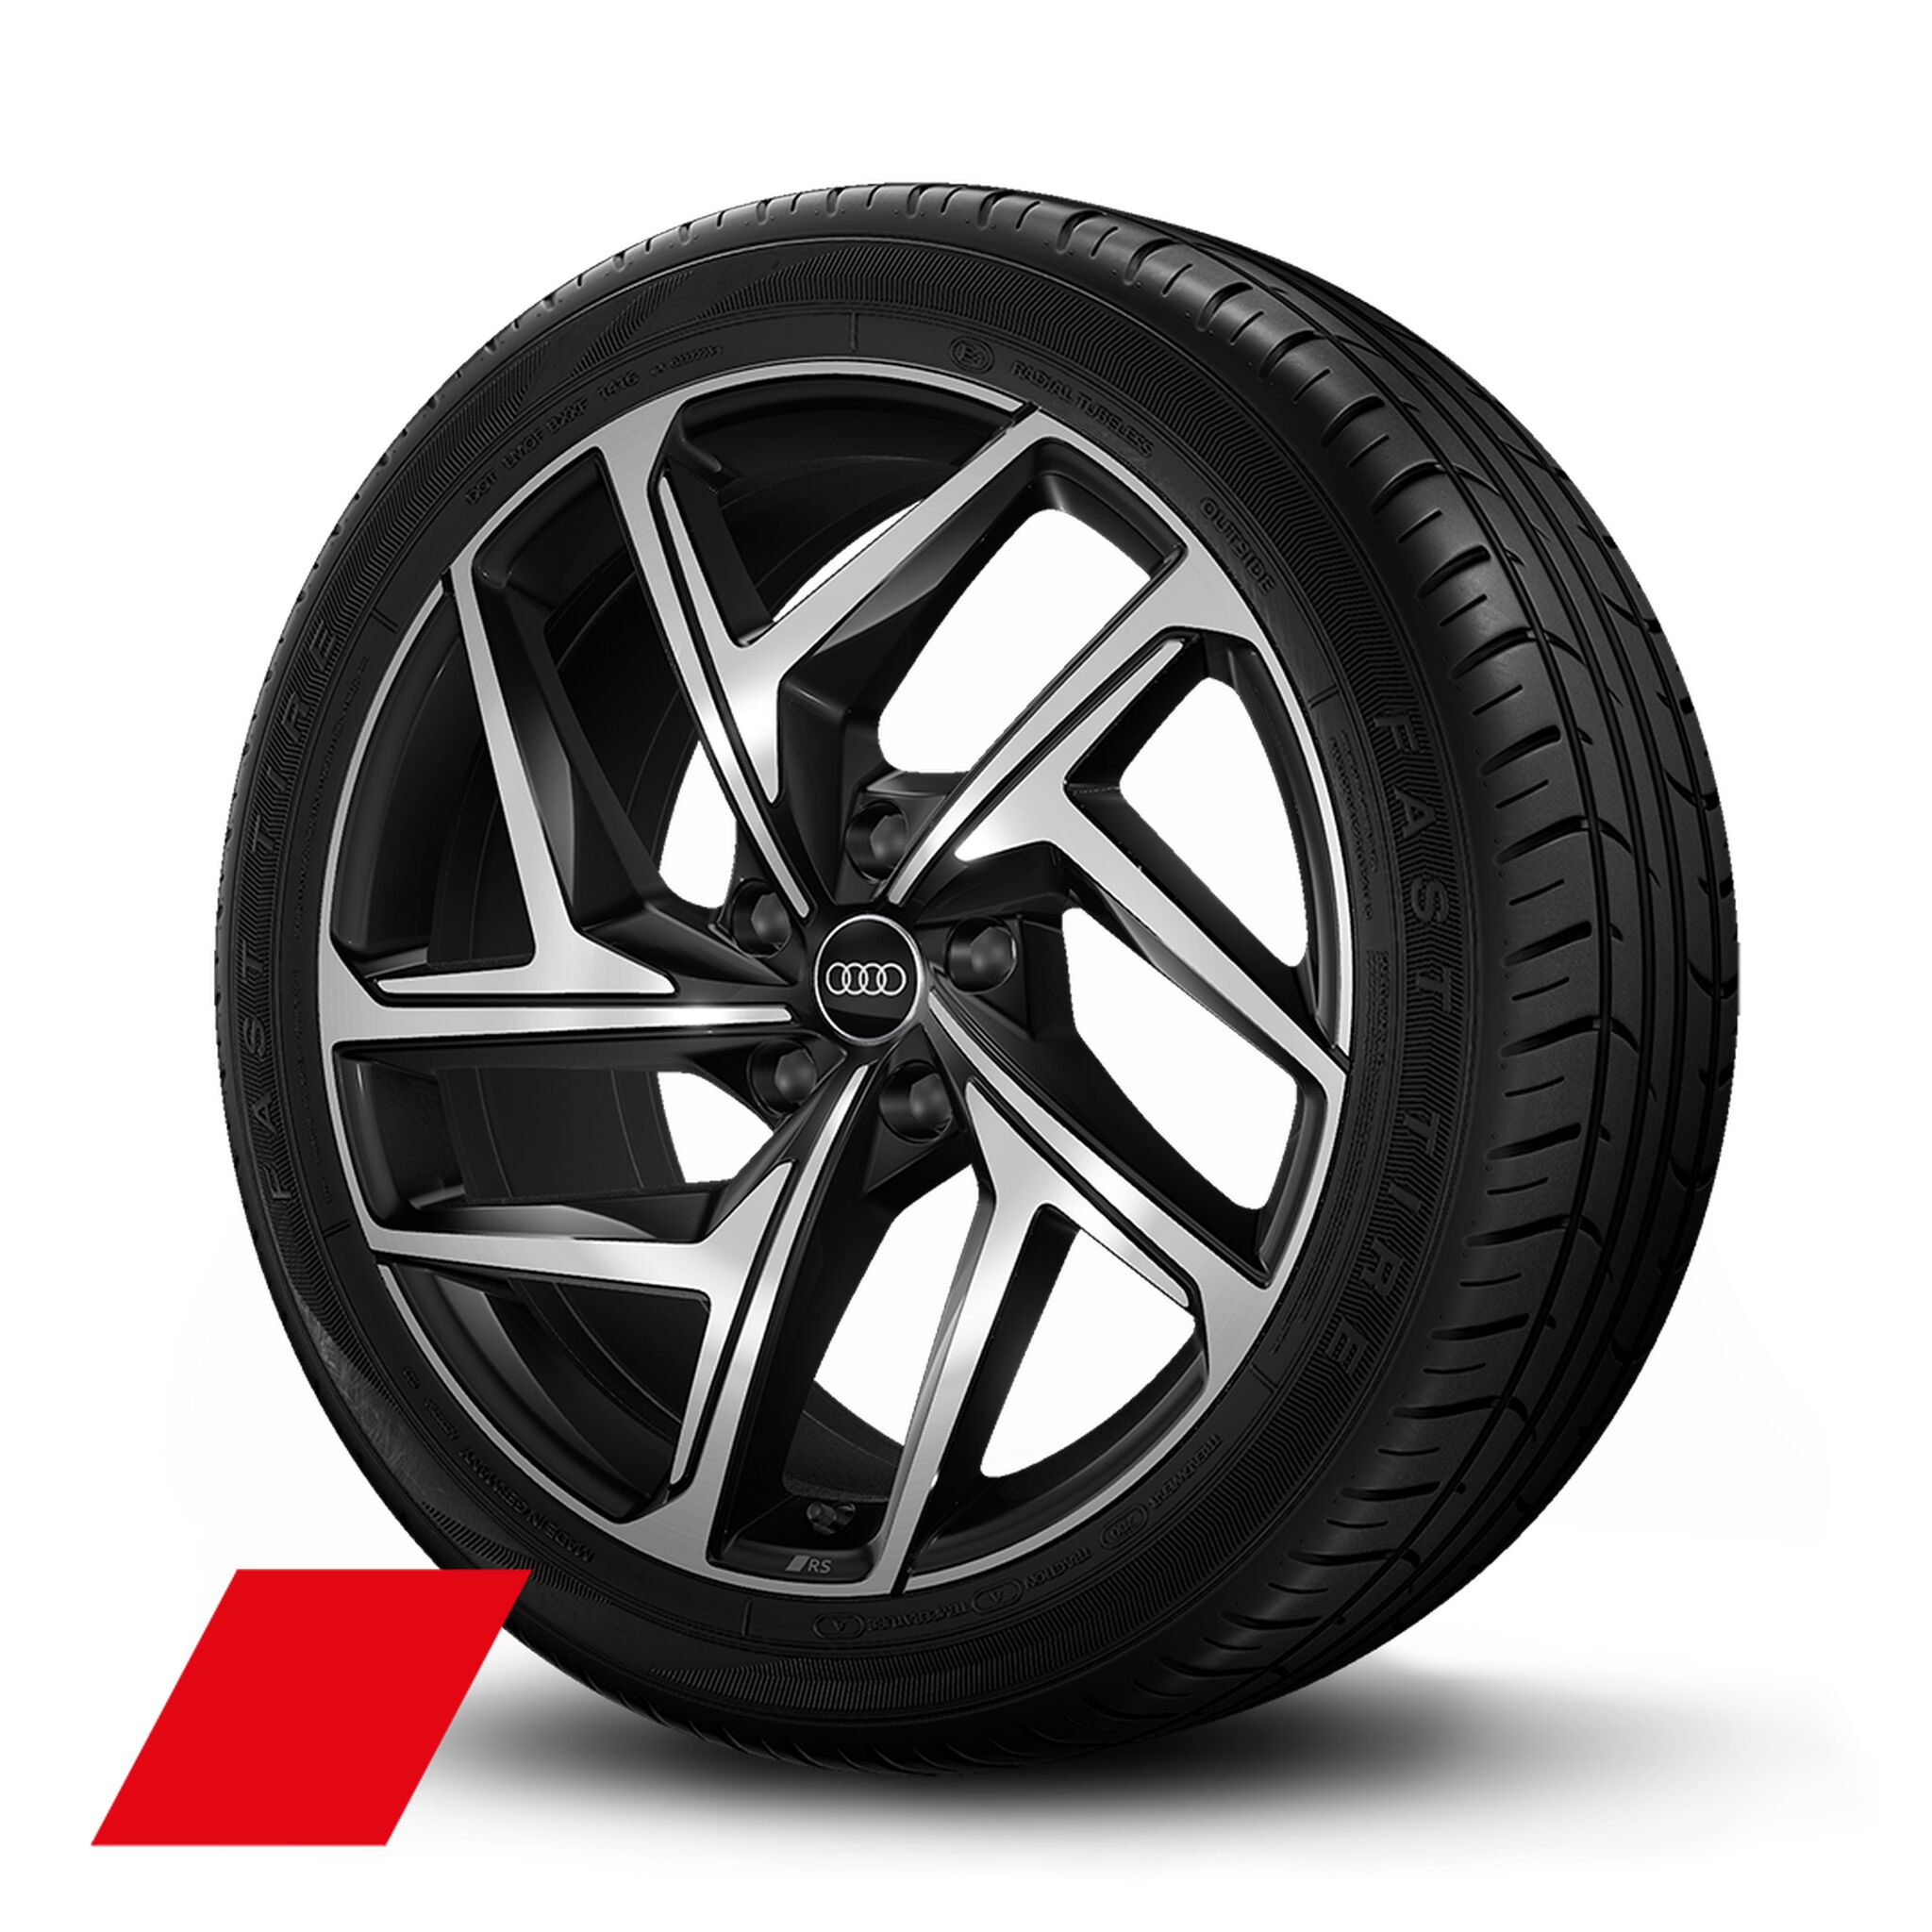 Audi Sport wielen, 5-Y-spaaks dynamisch, zwart metallic, hoogglans, 9,0J|10,0Jx21, banden 255/45|285/40 R21